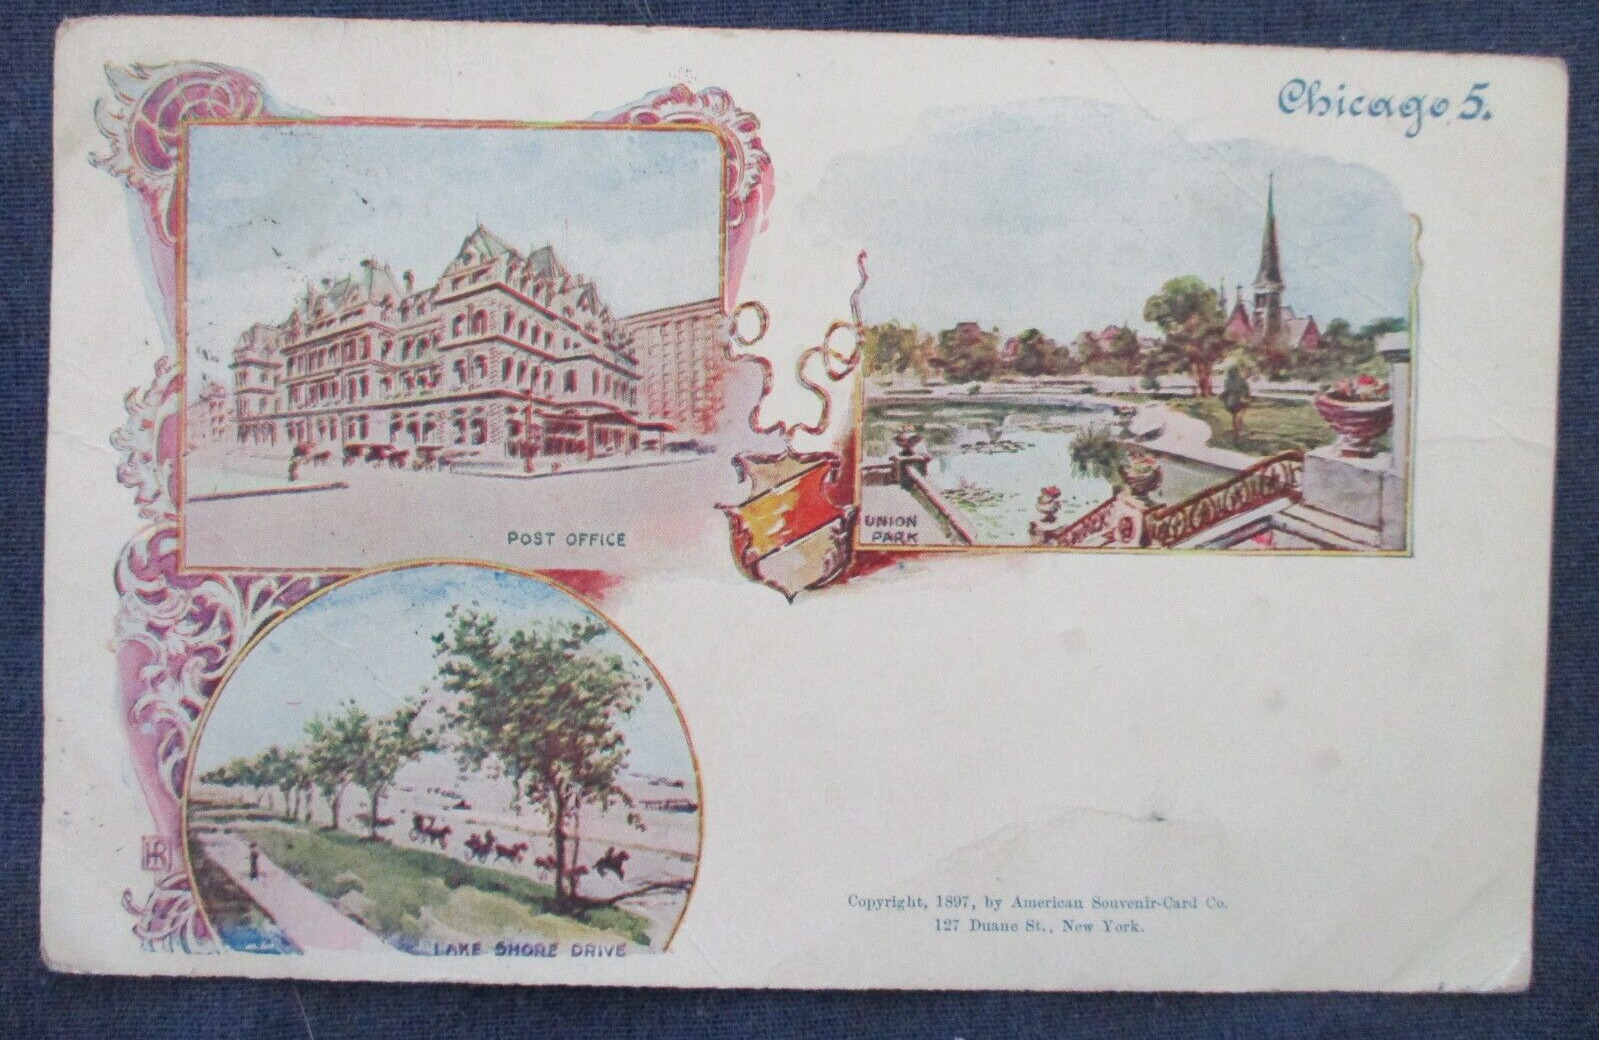 Chicago Illinois Multi View Postcard Copyright dated 1897 Souvenir Card Co